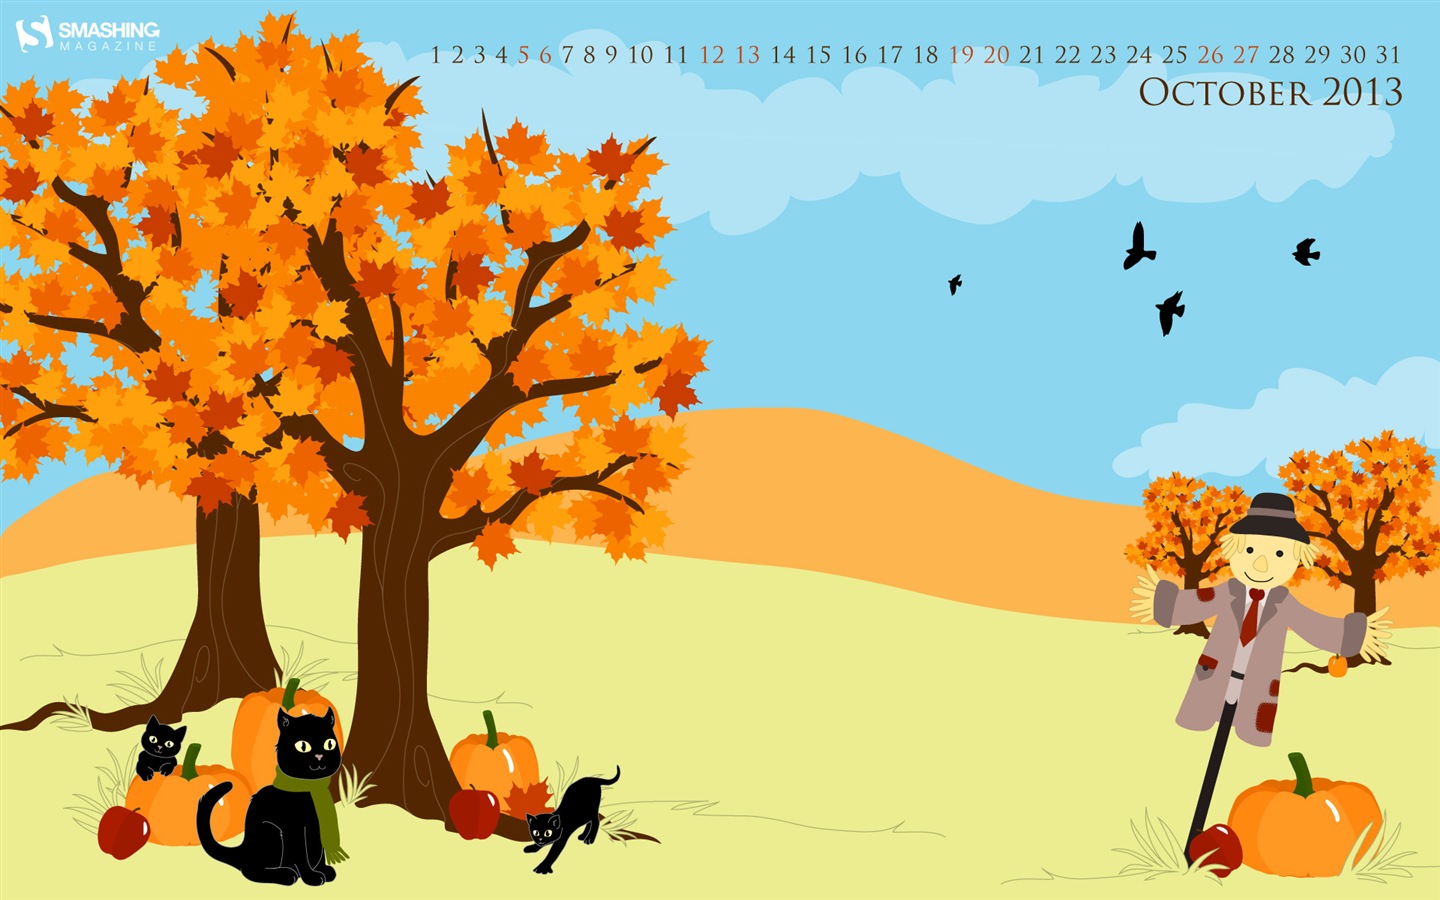 October 2013 calendar wallpaper (2) #15 - 1440x900